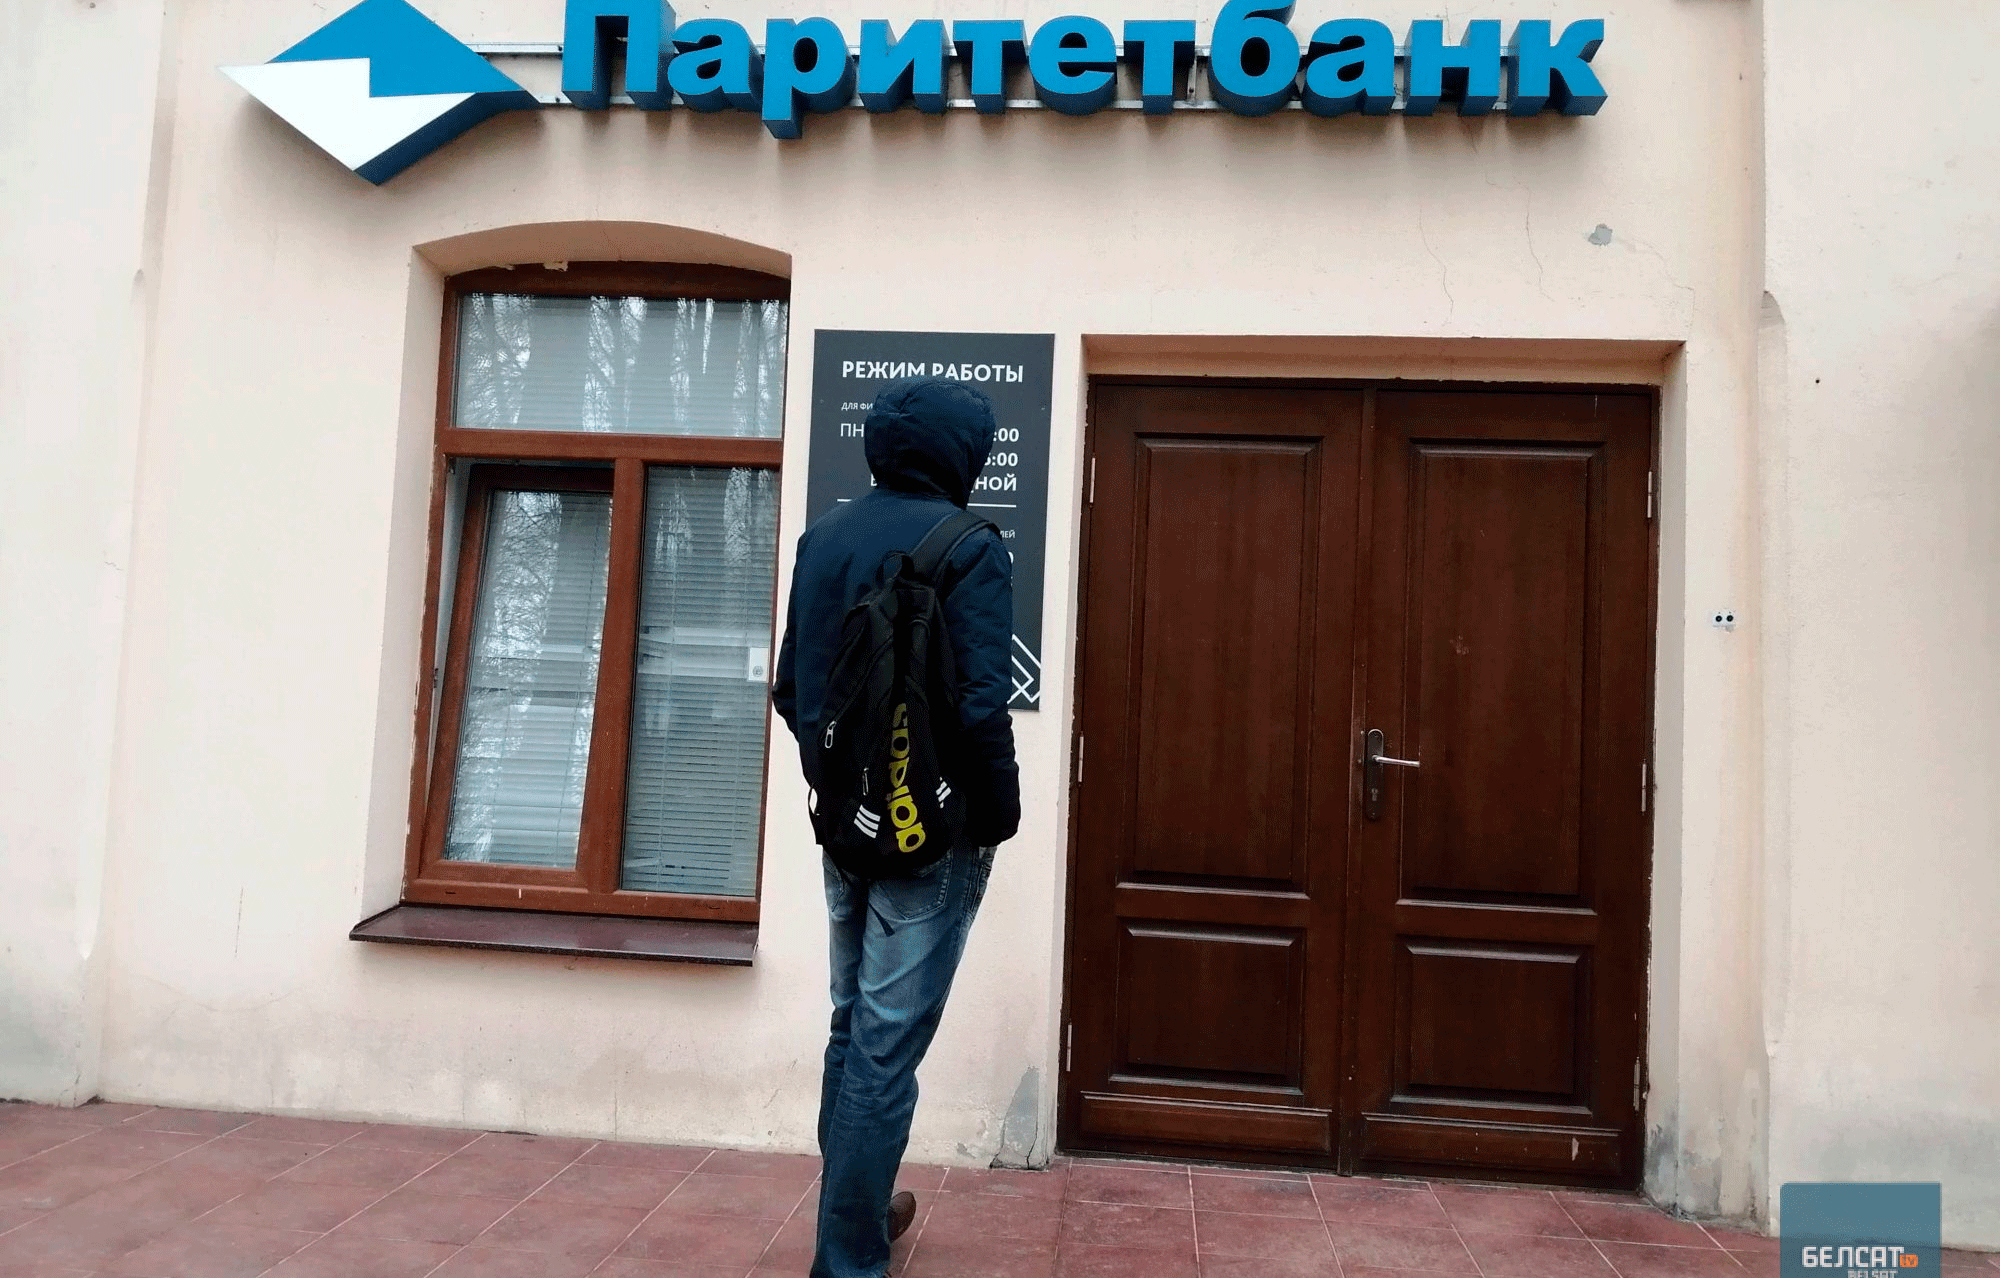 Фотофакт: очередь на улице перед банком в Витебске